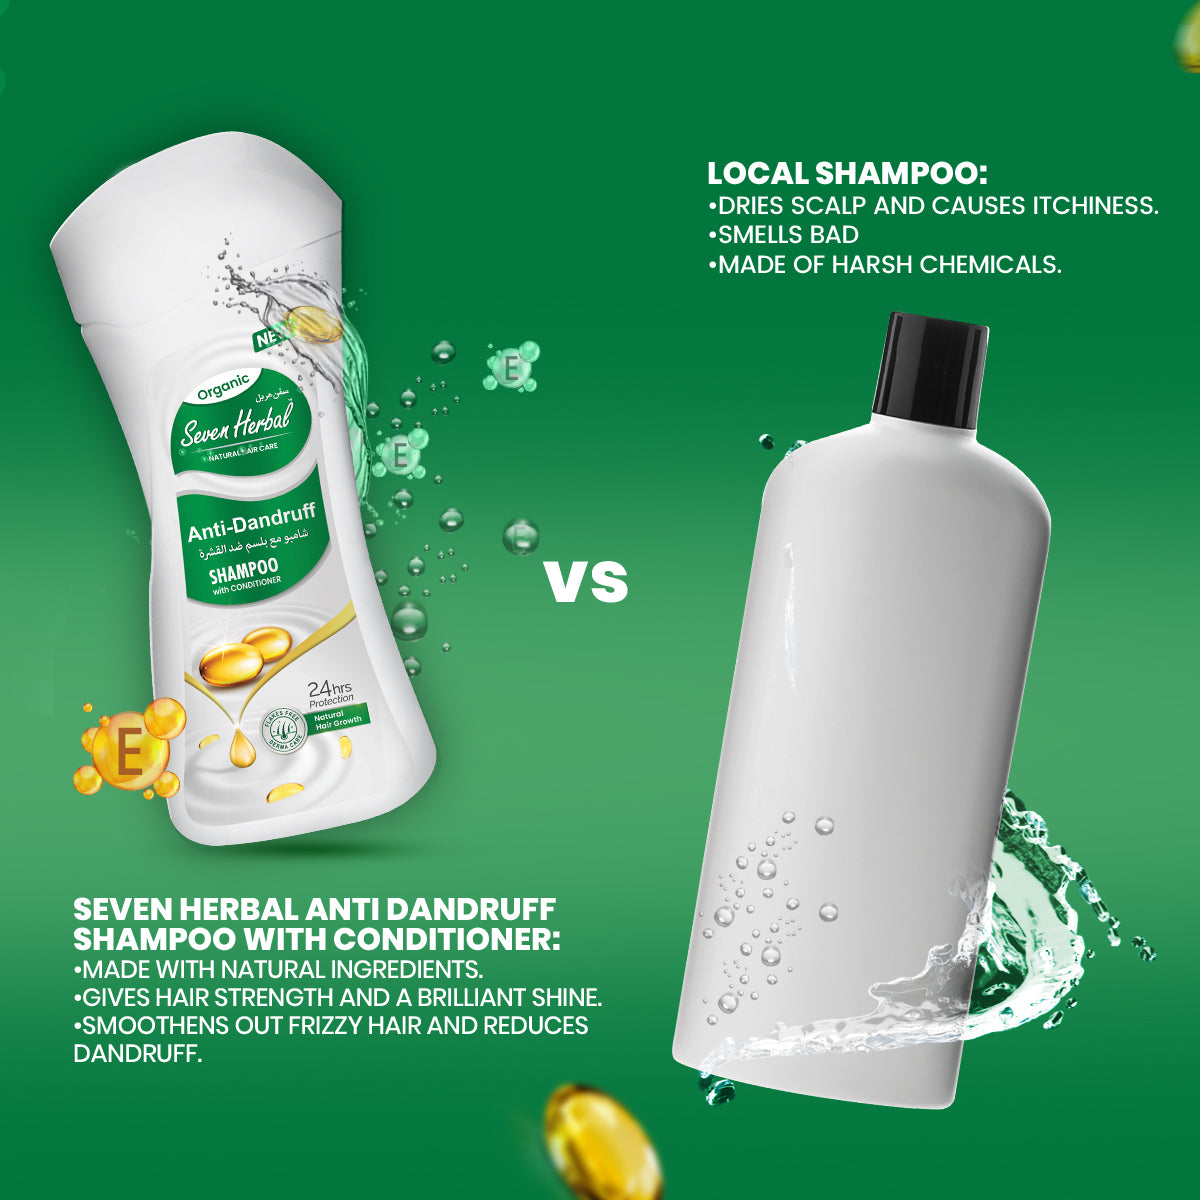 Seven Herbal Anti-Dandruff Shampoo with Conditioner